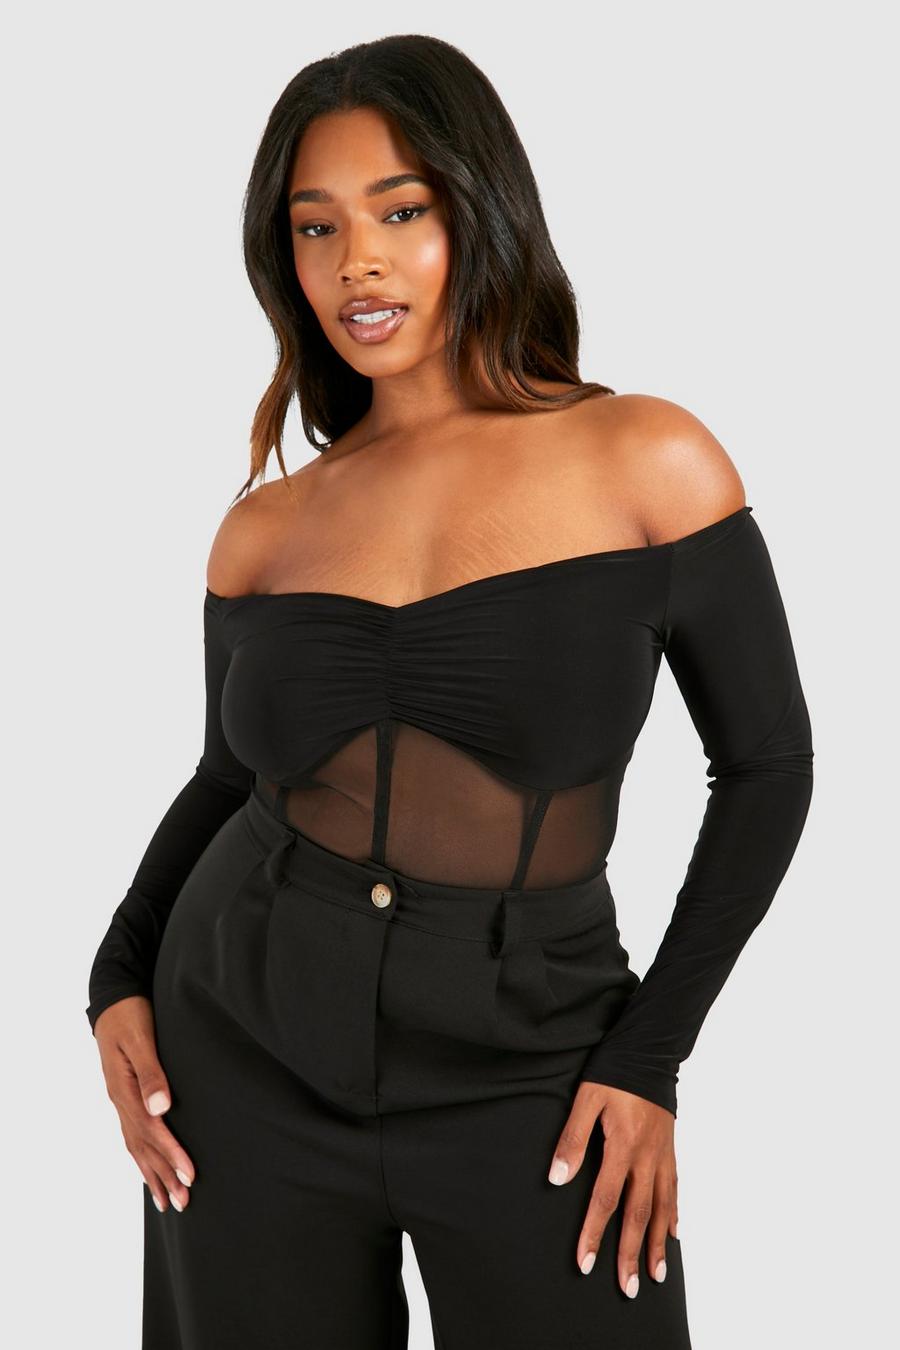 https://media.boohoo.com/i/boohoo/gzz86300_black_xl/female-black-plus-bardot-corset-mesh-bodysuit/?w=900&qlt=default&fmt.jp2.qlt=70&fmt=auto&sm=fit